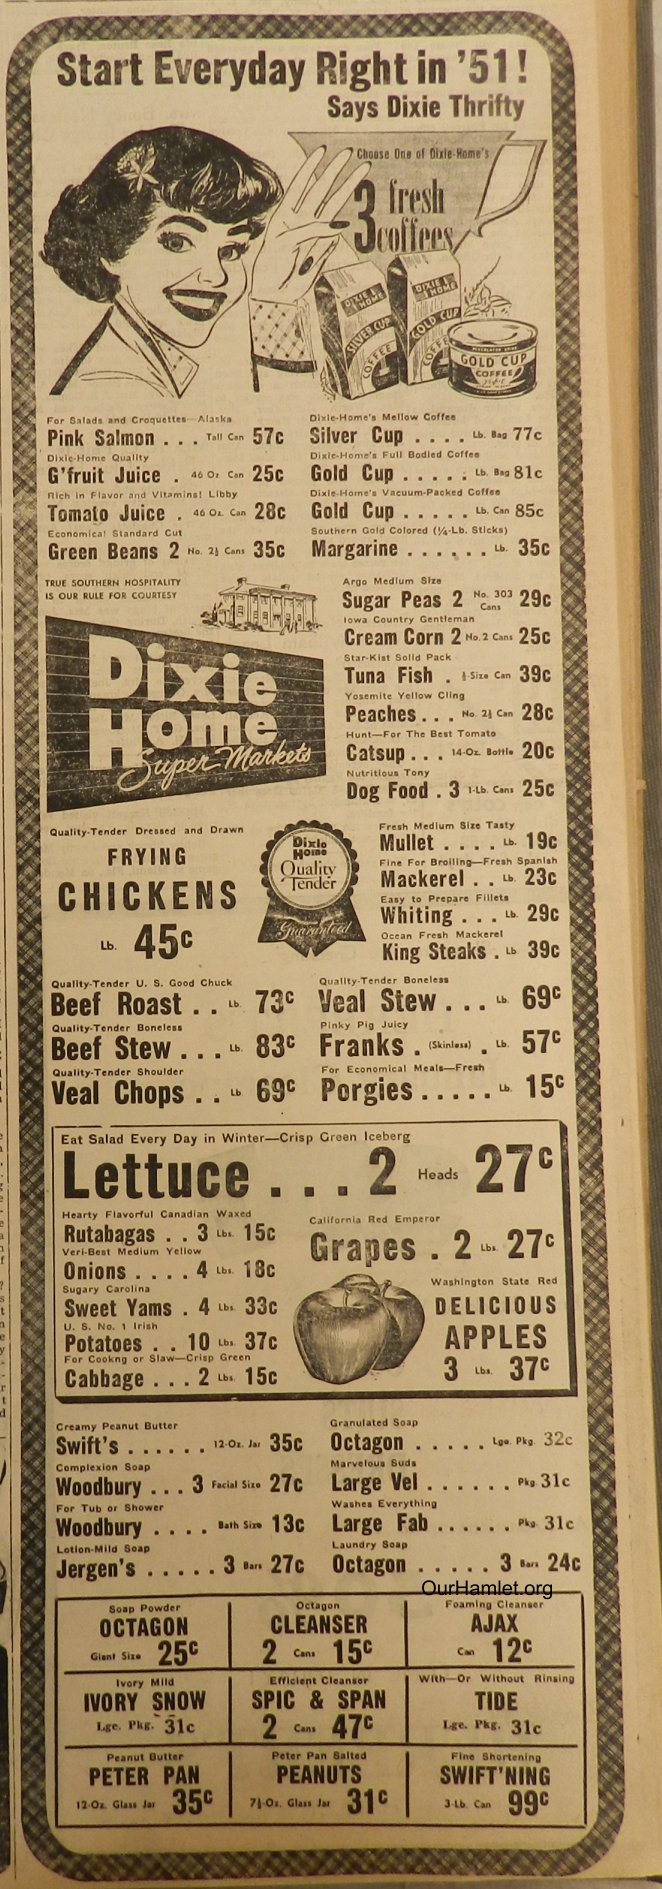 1951 Dixie Home Super Market OH.jpg